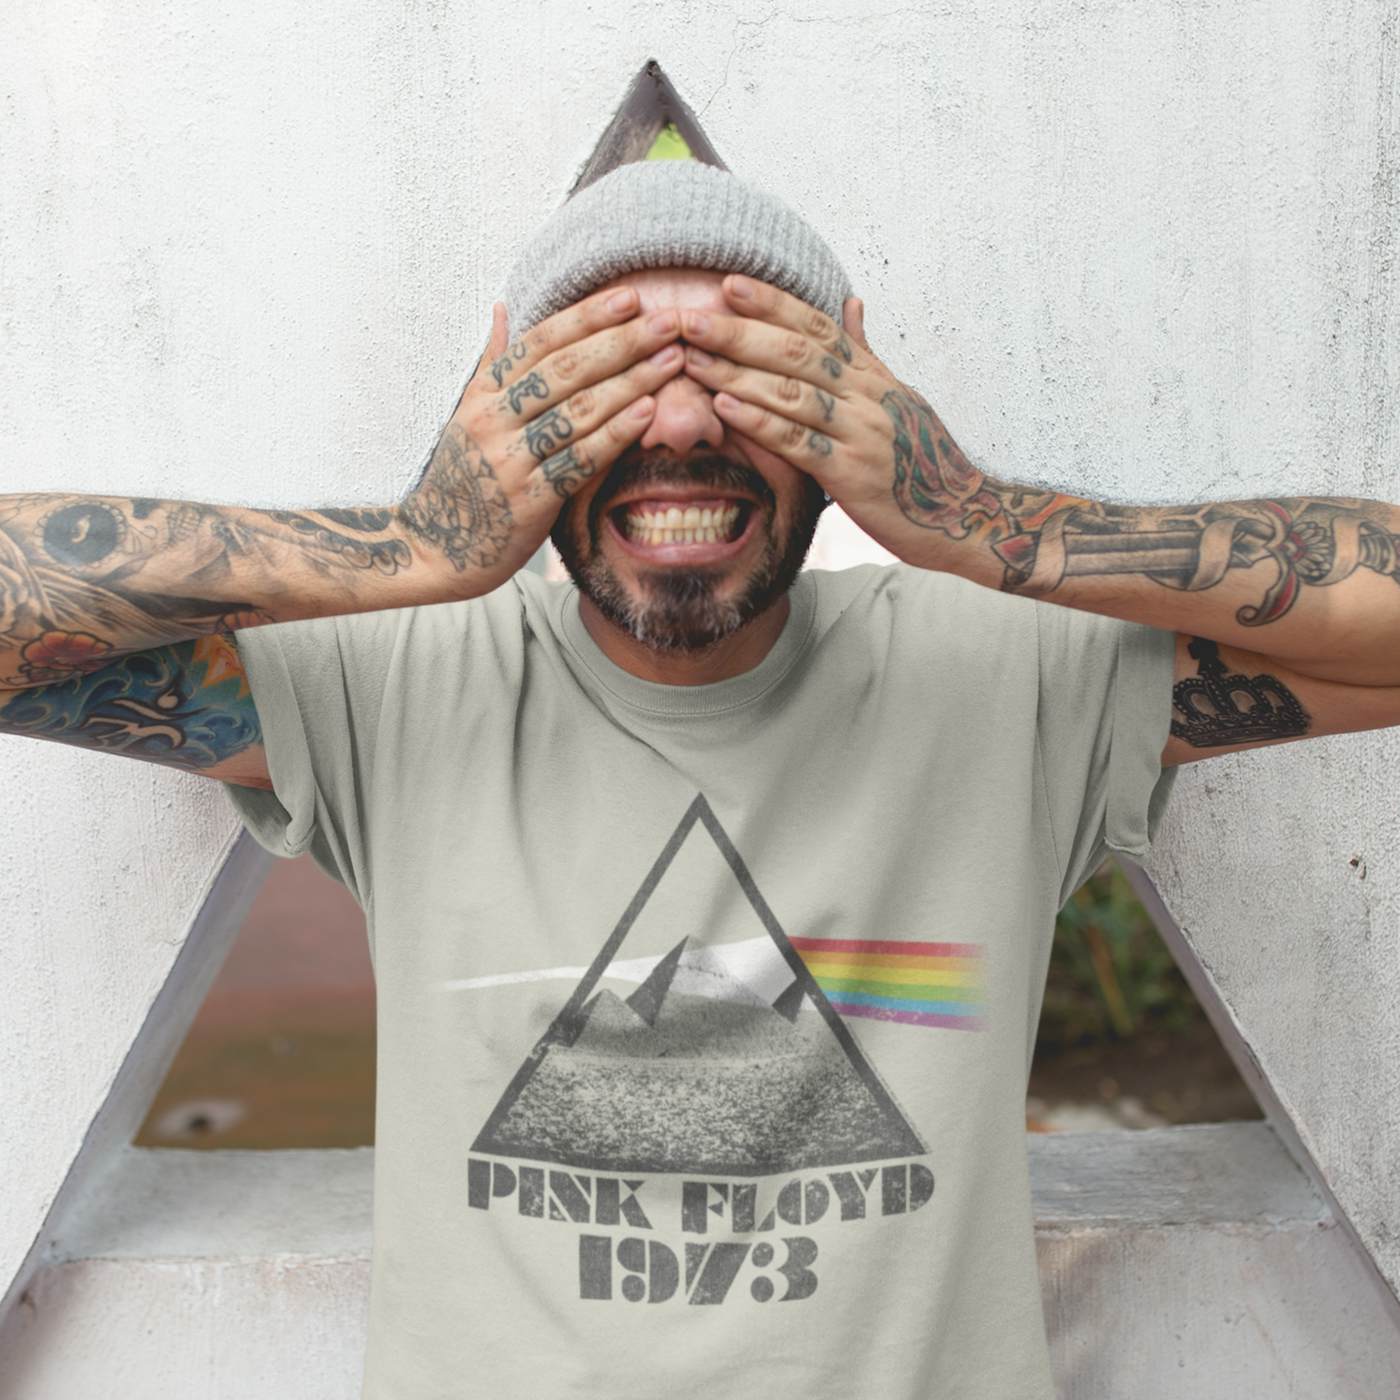 Side Shirt | Pyramid Dark Pink Pink Floyd 1973 Floyd T-Shirt